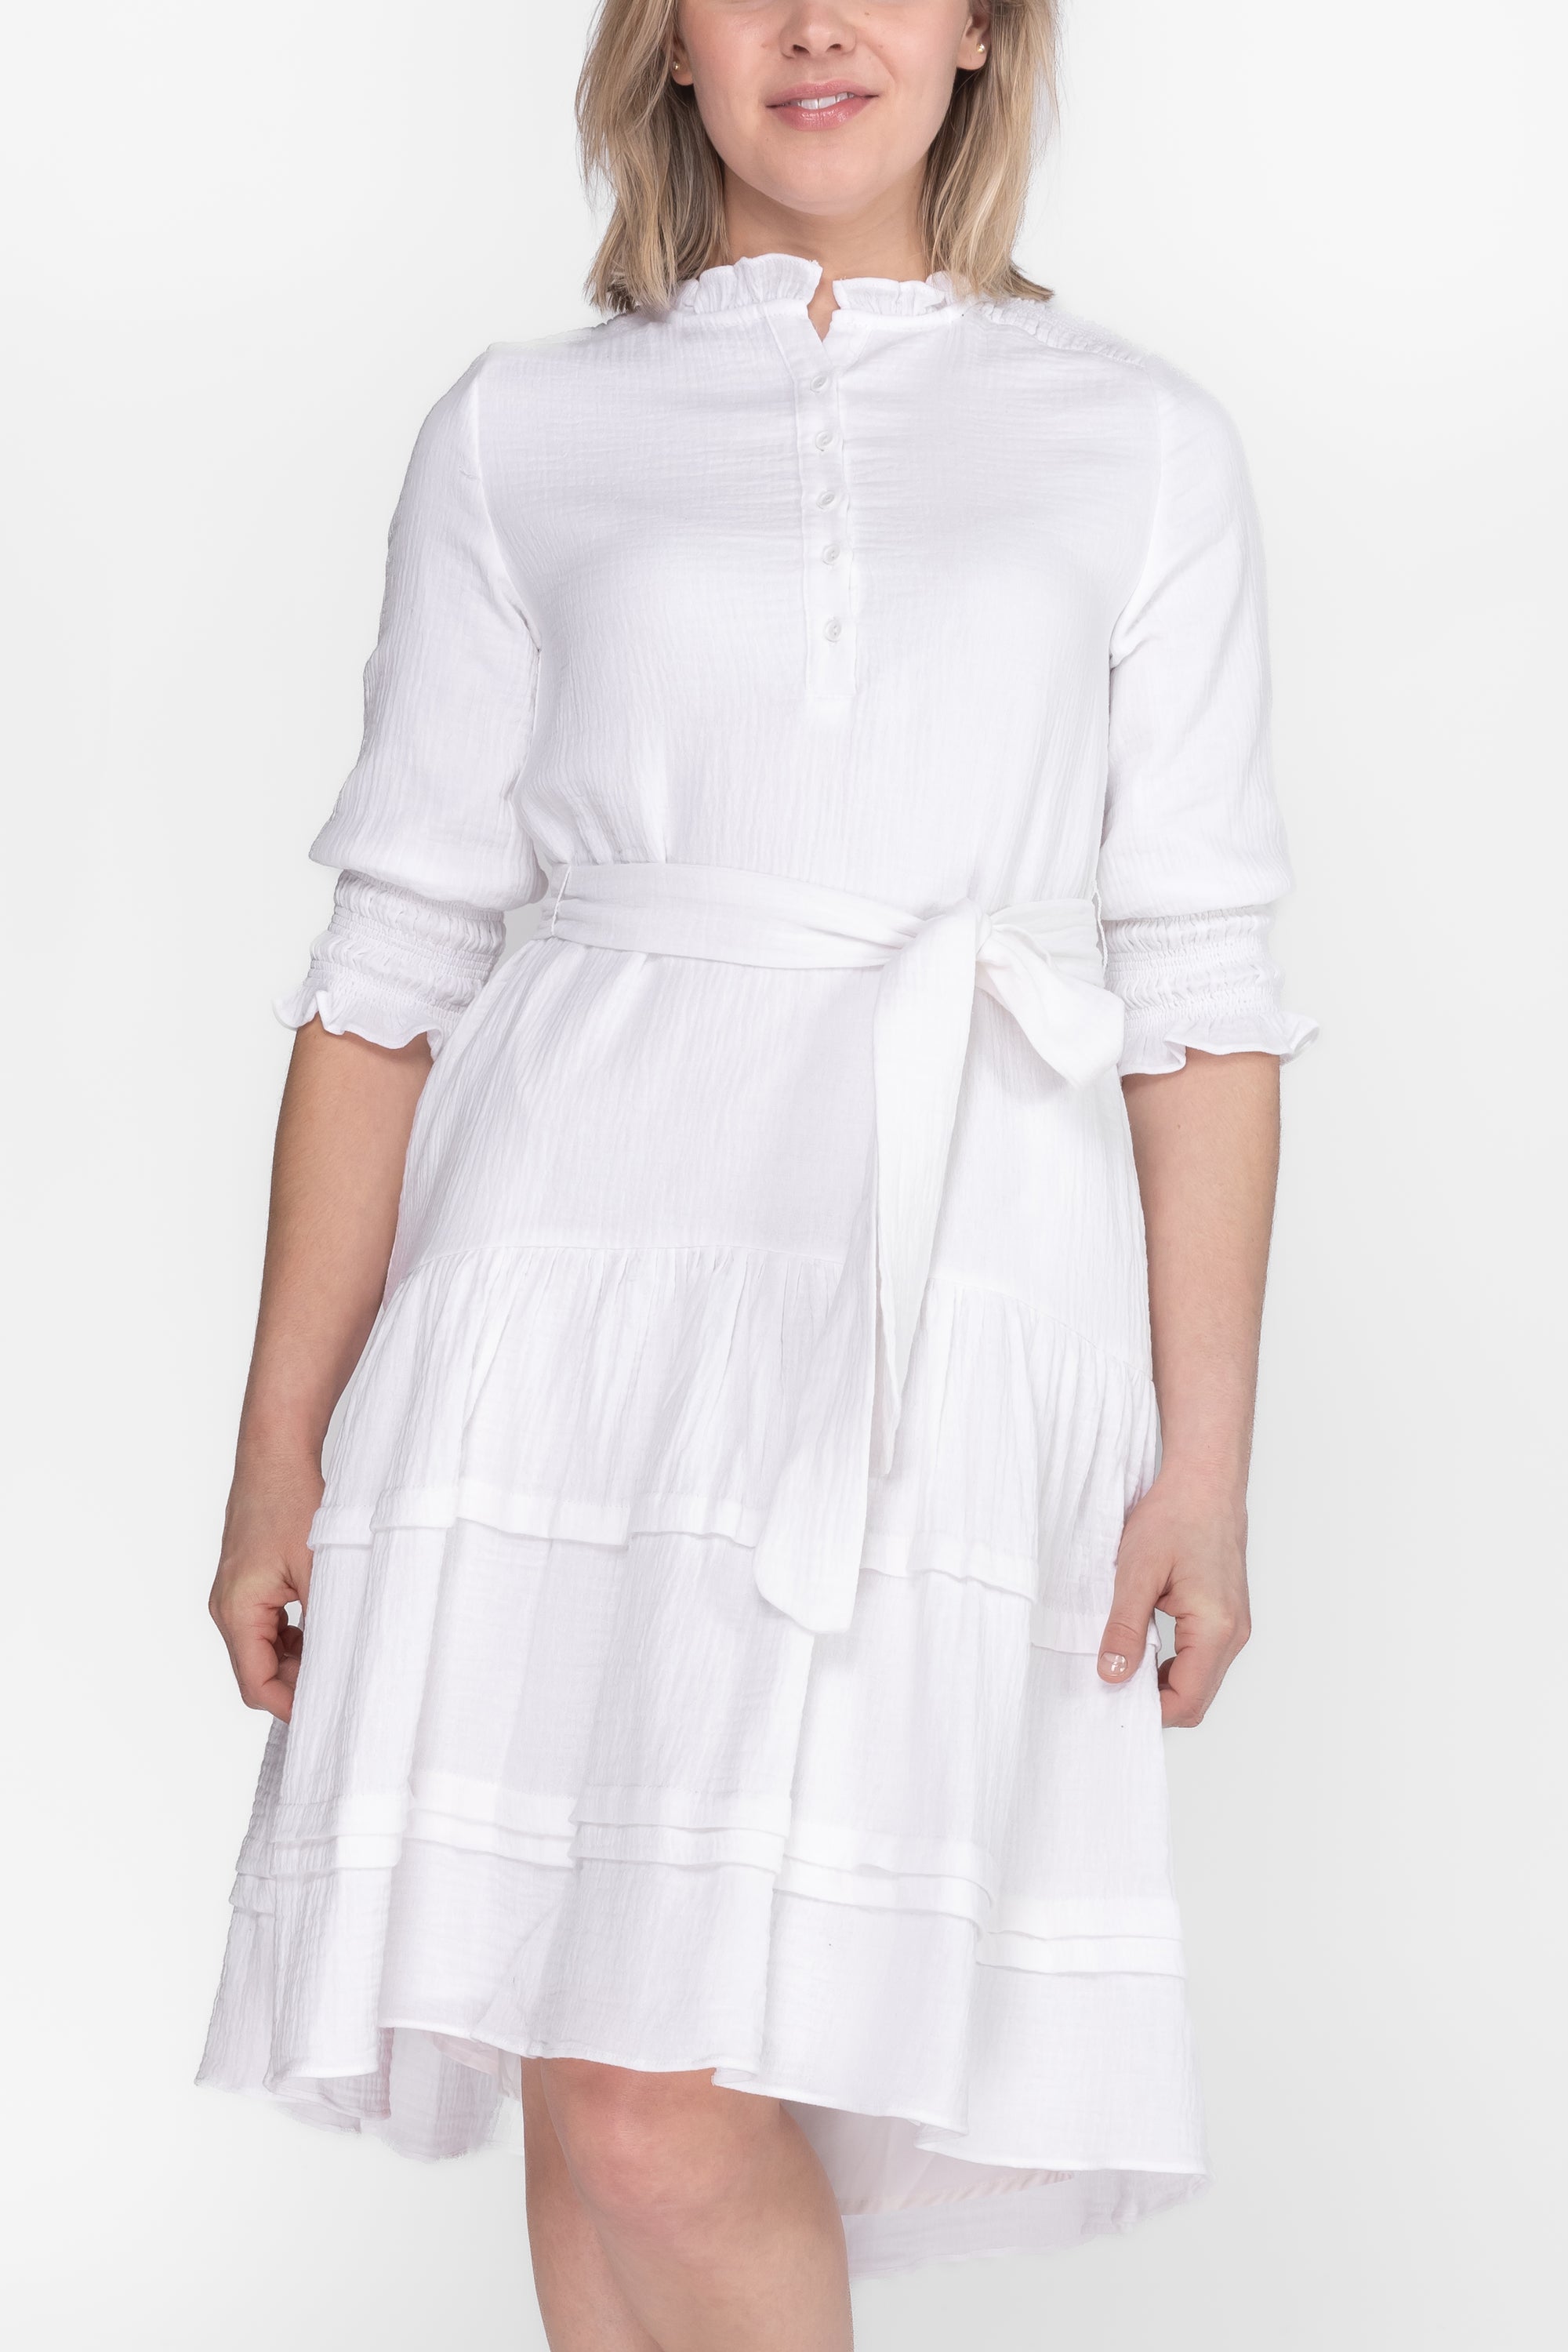 ABBY DRESS (WHITE)